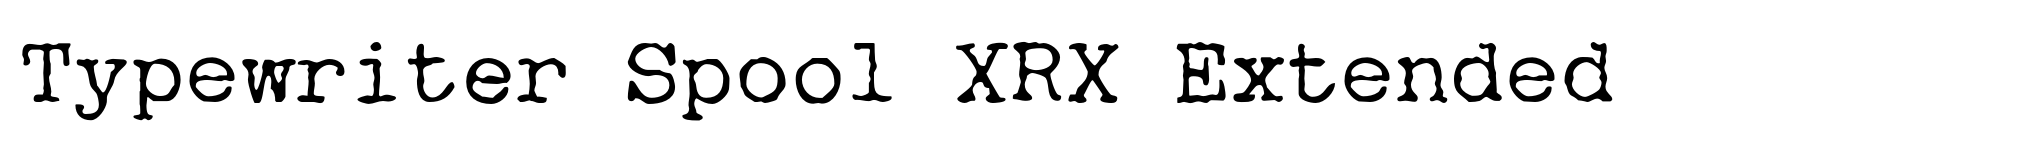 Typewriter Spool XRX Extended image